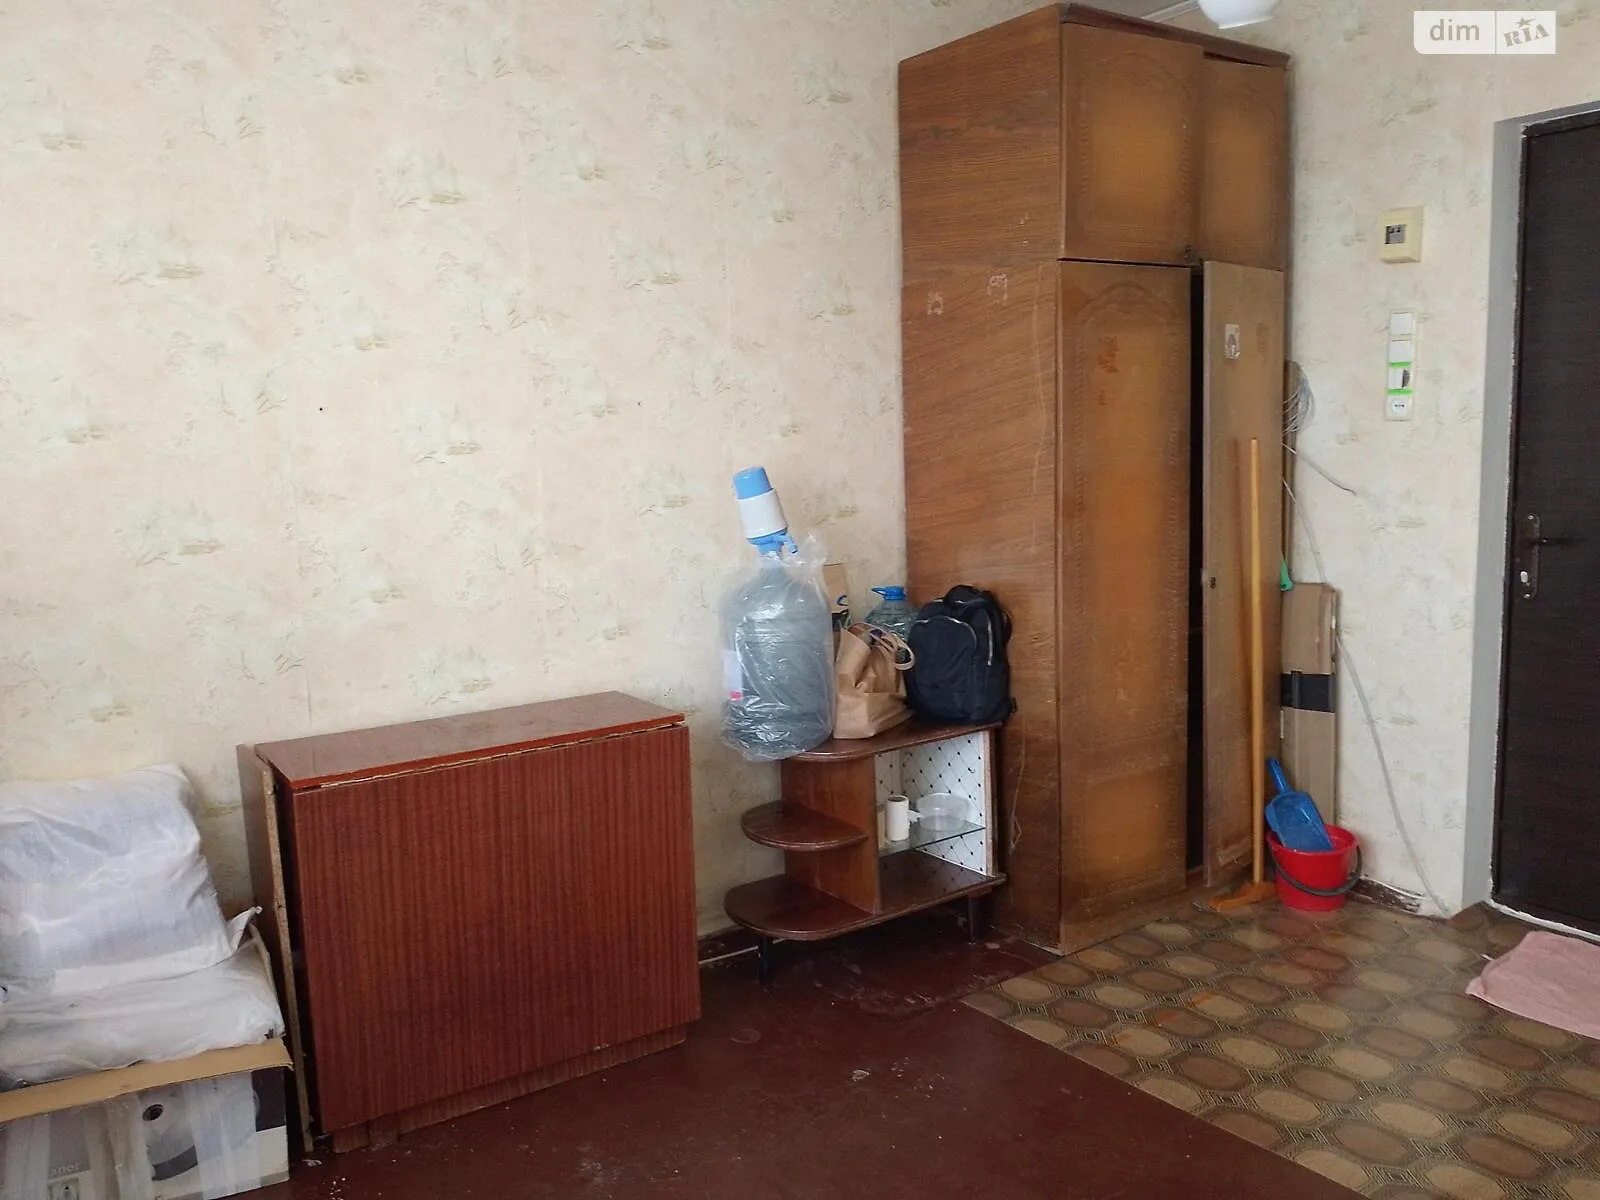 Продается комната 19 кв. м в Харькове - фото 2